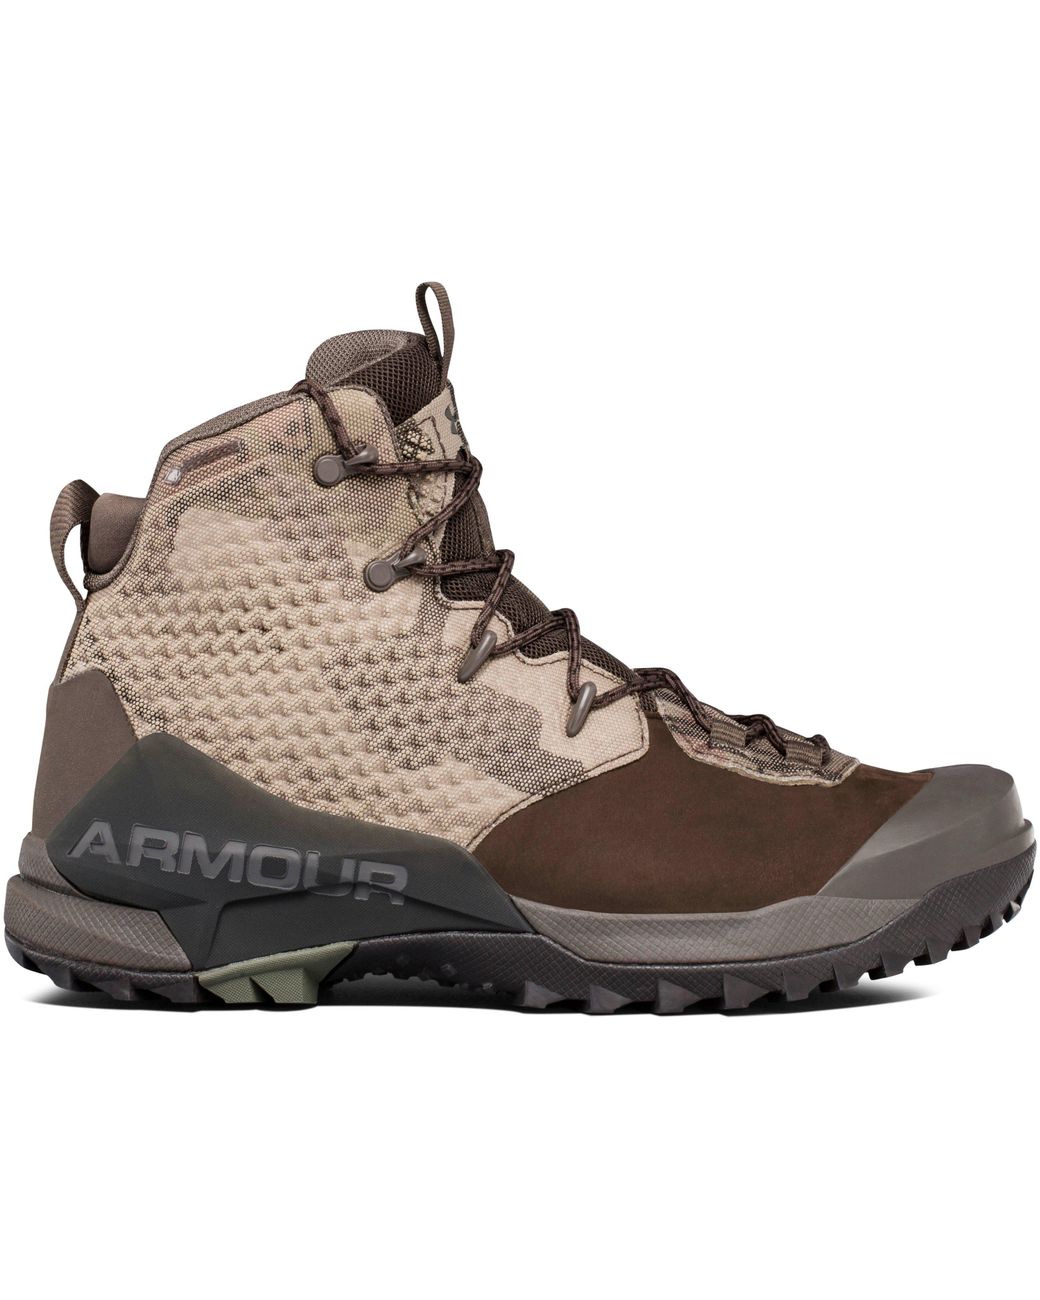 Lo siento Decremento Comedia de enredo Under Armour Men's Ua Infil Hike Gore-tex® Hiking Boots in Brown for Men |  Lyst